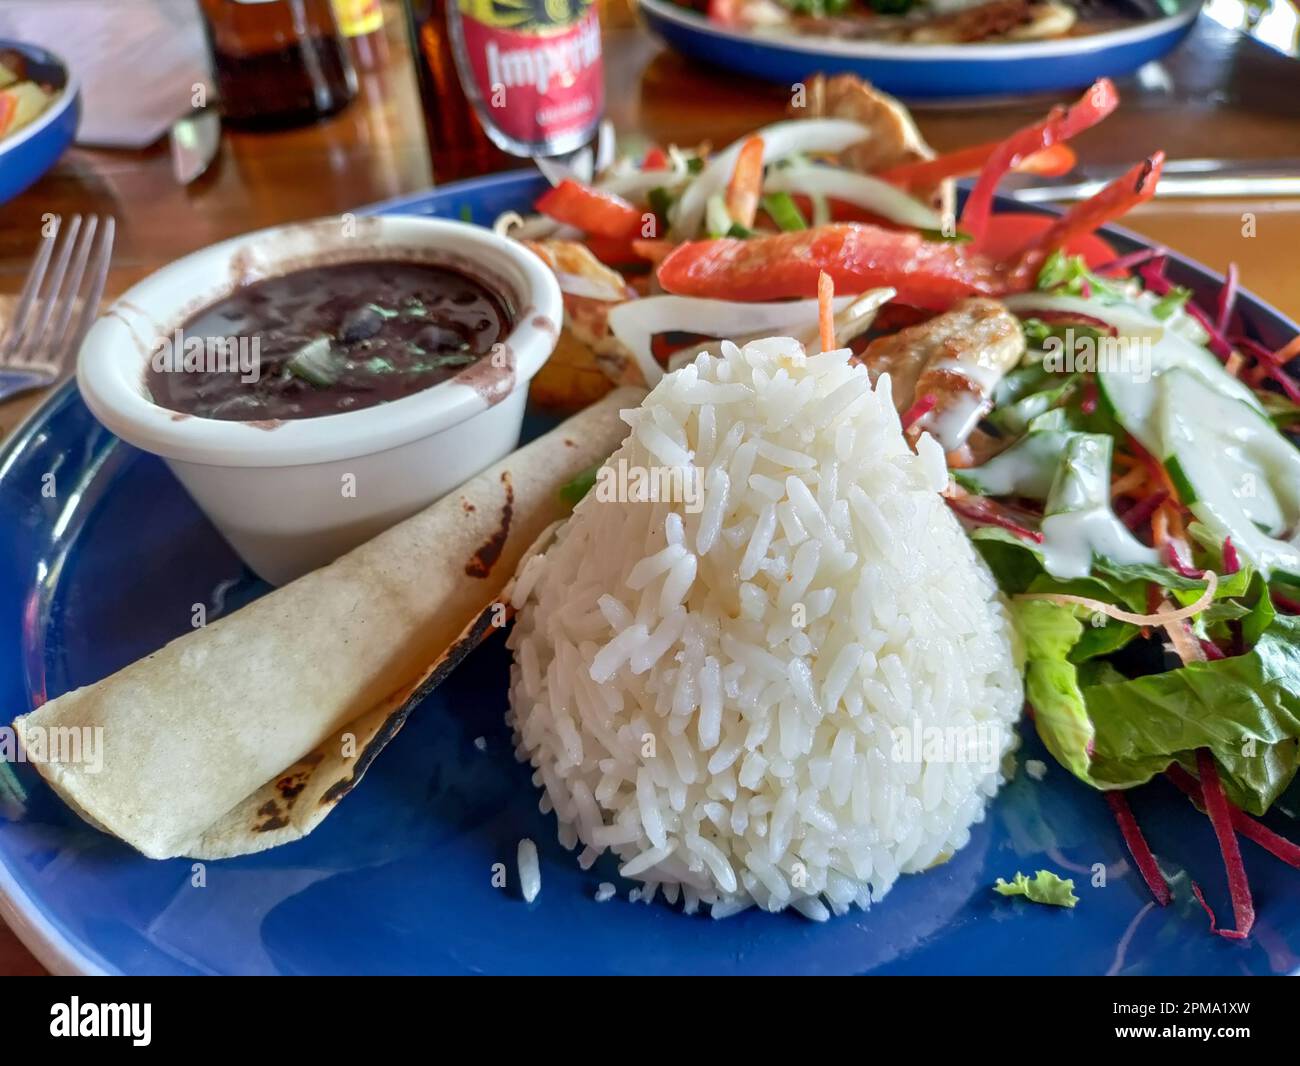 La Fortuna, Costa Rica - Casado, un déjeuner traditionnel au Costa Rica. Il comprend habituellement du riz, des haricots, de la viande, des plantains, de la salade, et une tortilla. Banque D'Images